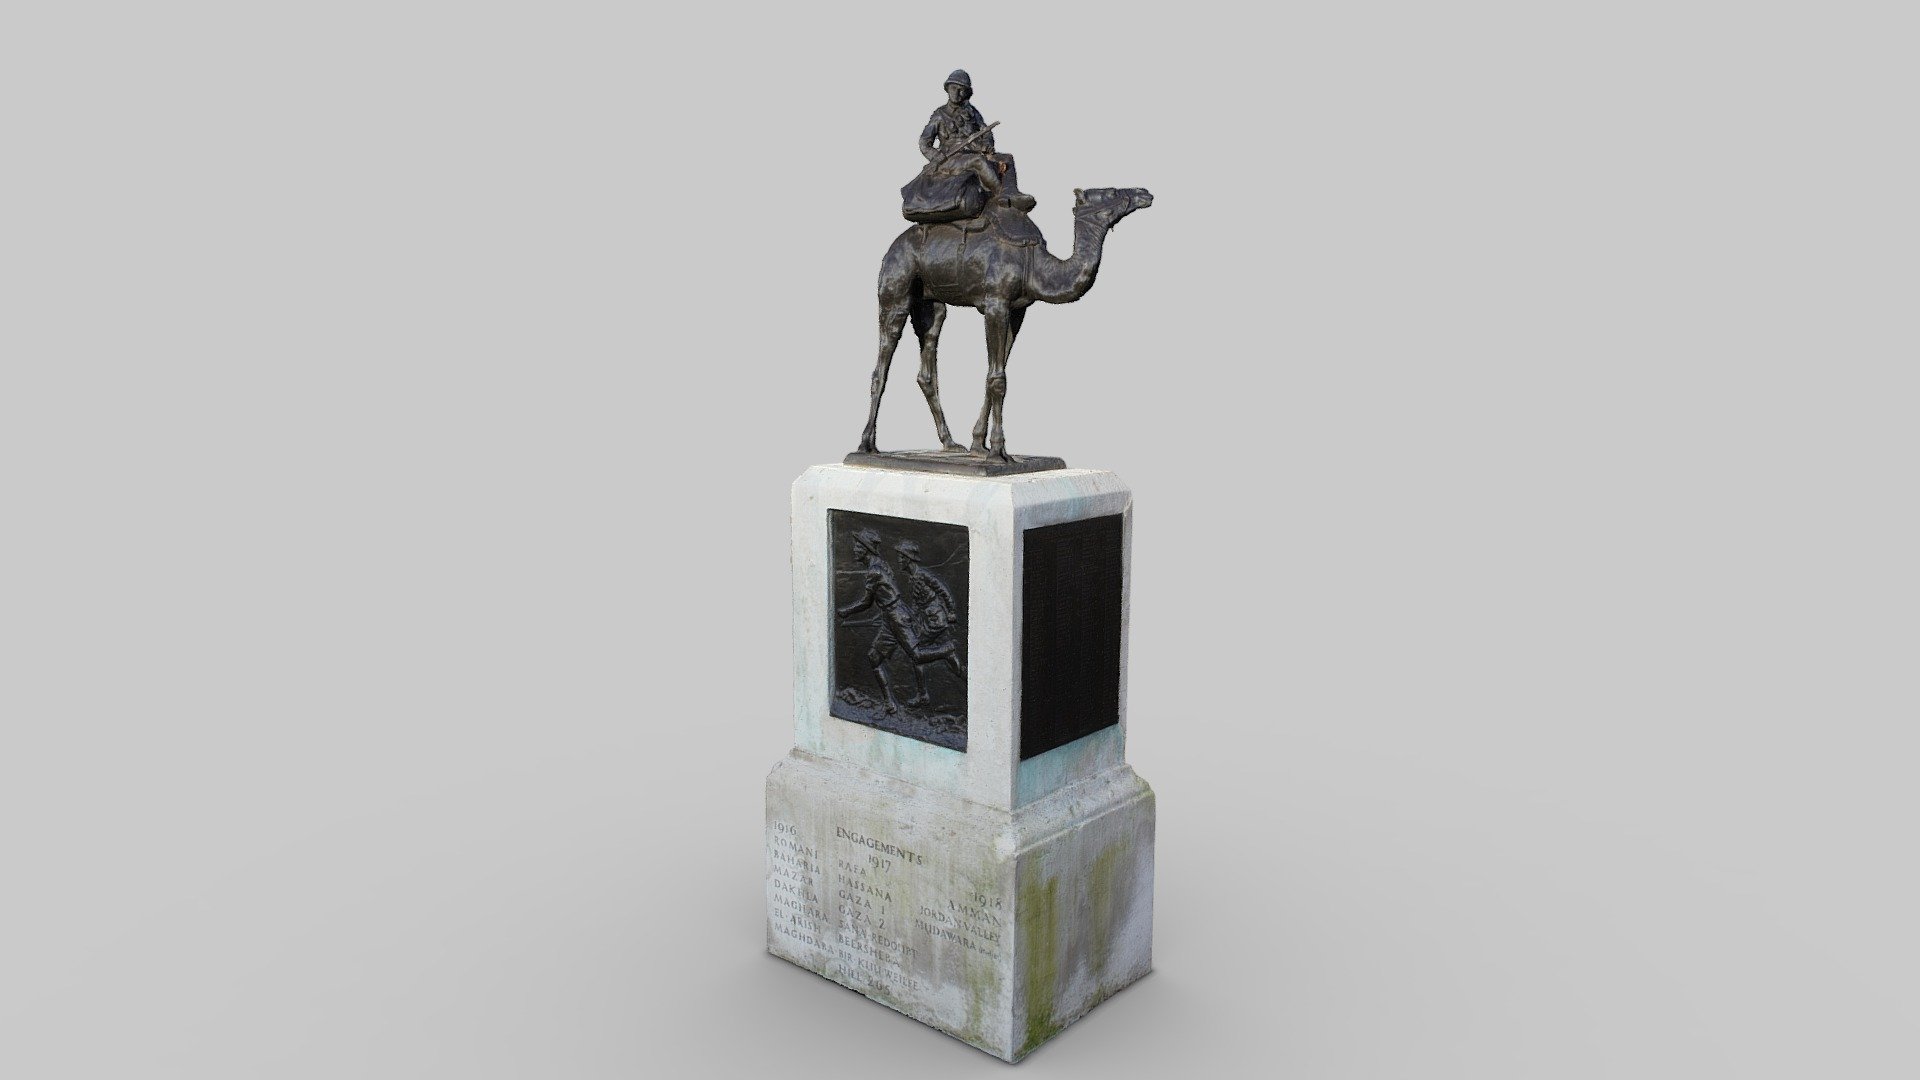 Imperial Camel Corps Memorial